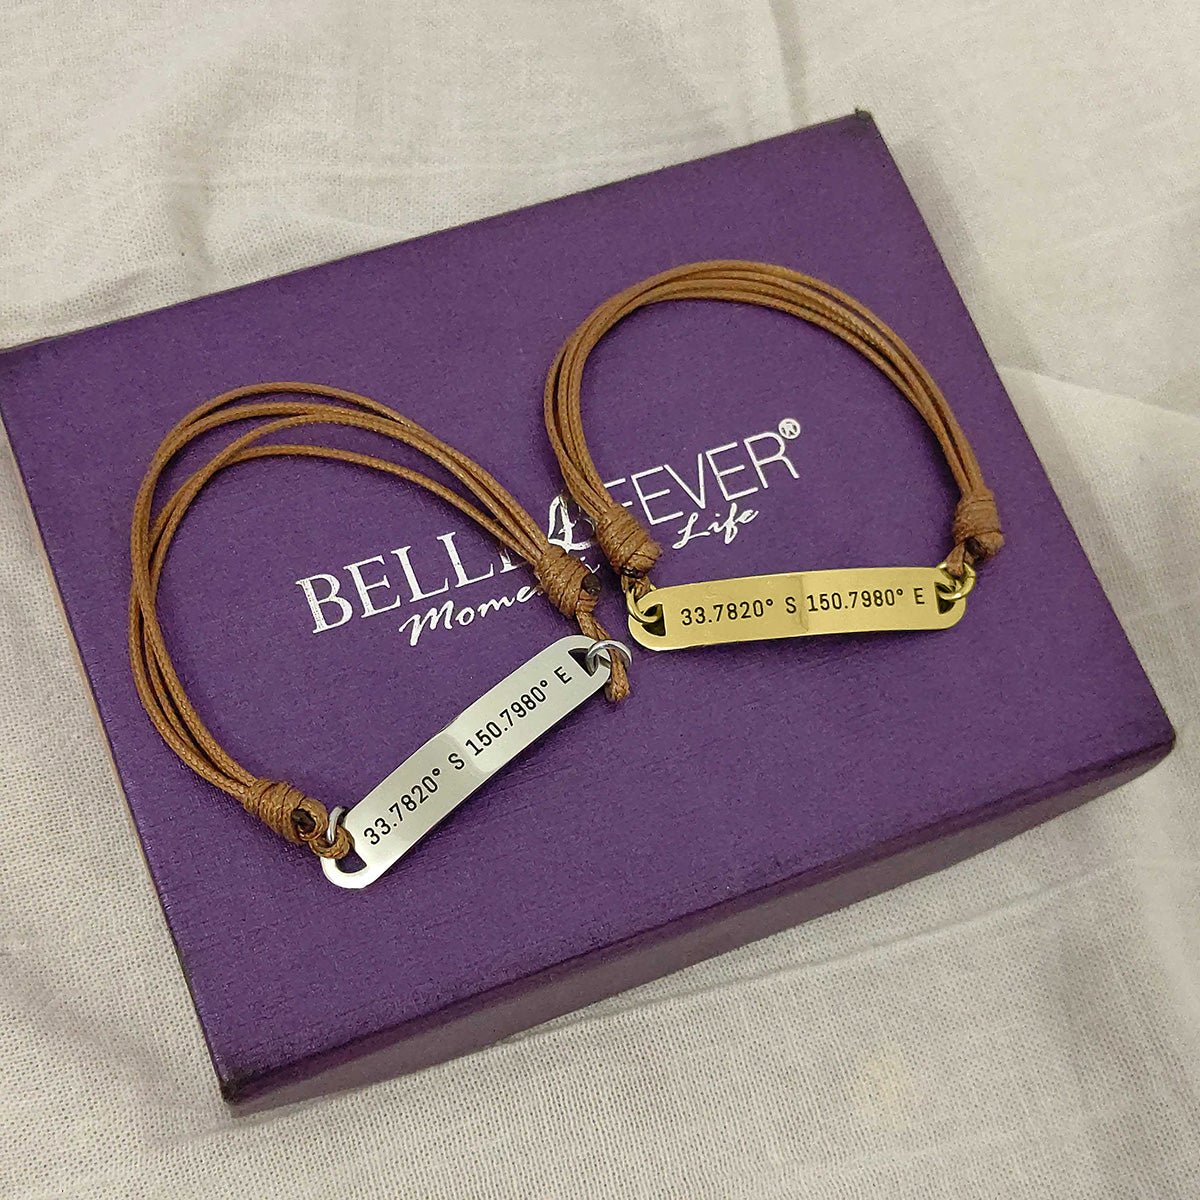 BUY ONE GET ONE Matching Bar Cord Bracelets - Bangles & Bracelets by Belle Fever